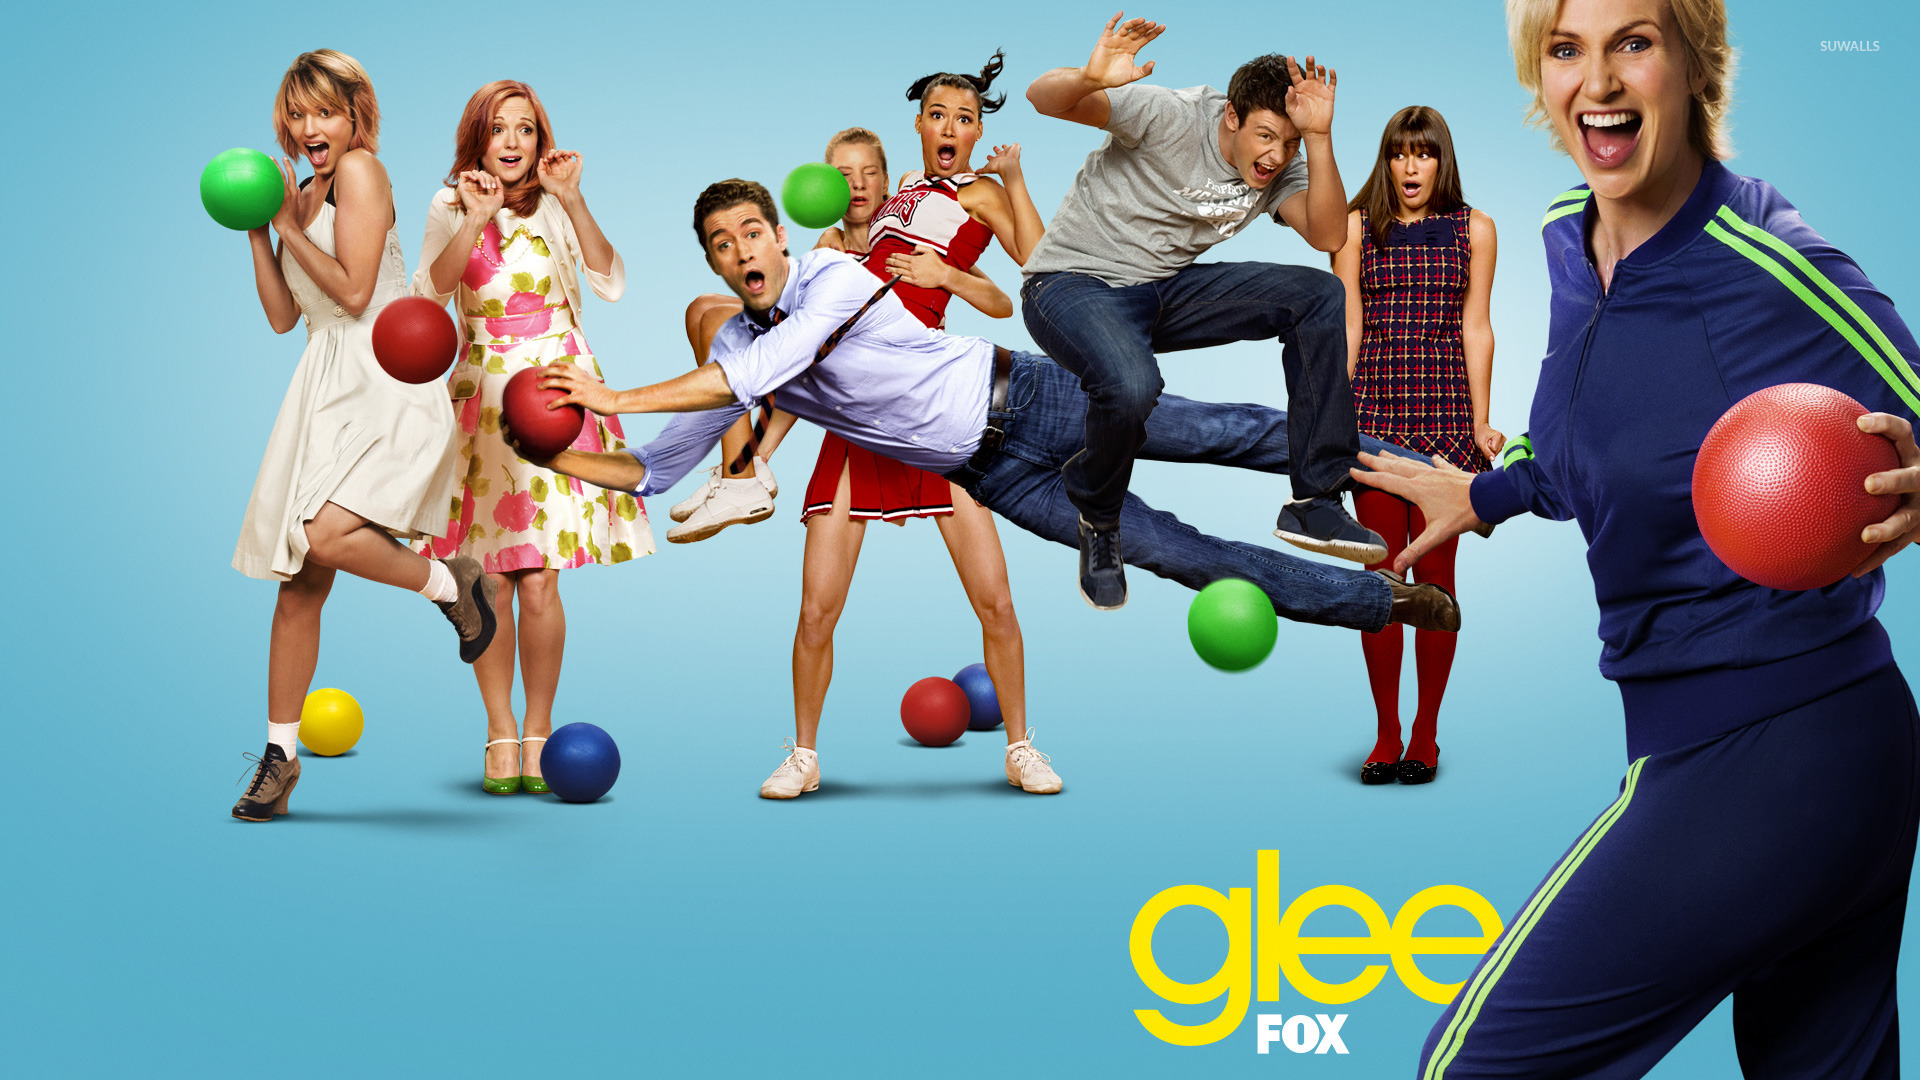 Glee Wallpaper Tv Show